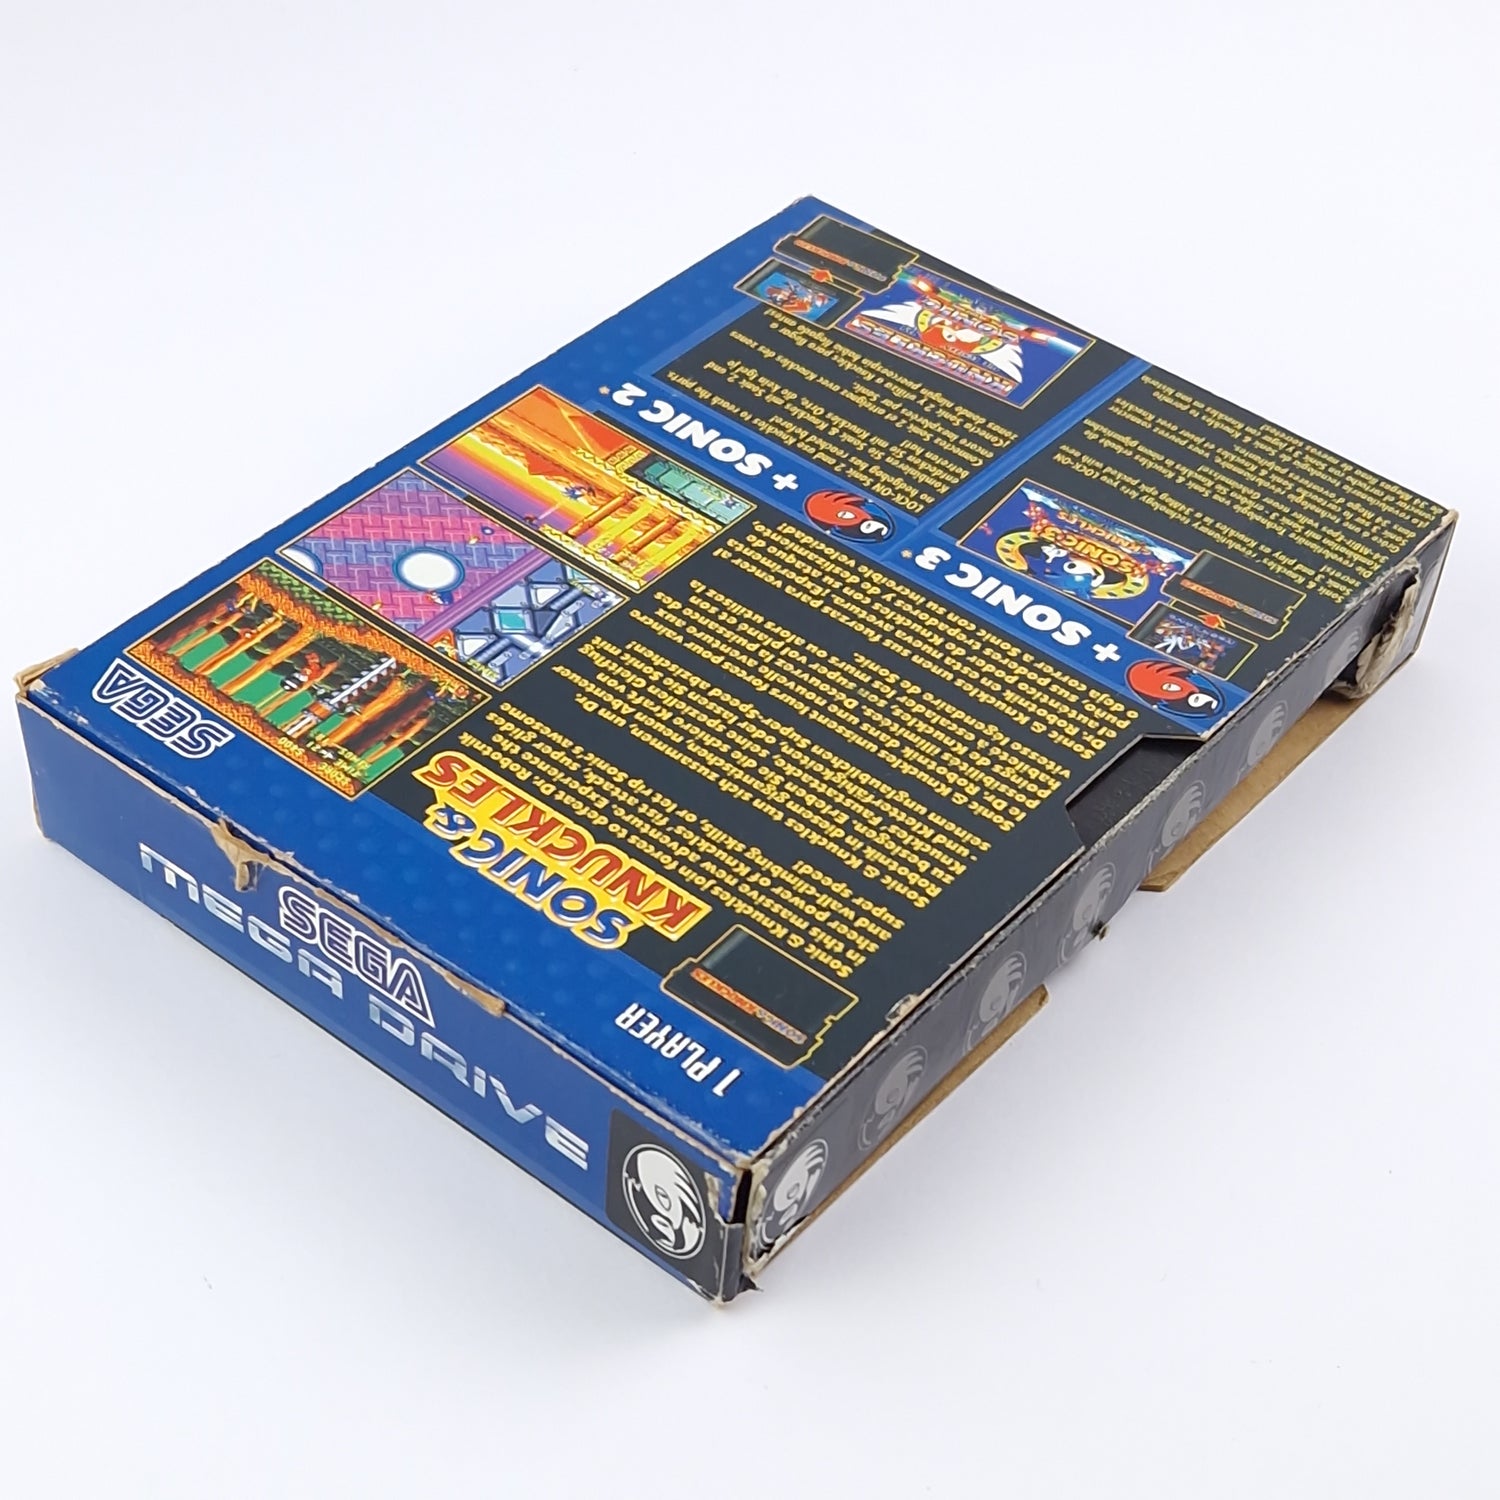 Sega Mega Drive Spiel : Sonic & Knuckles - OVP Anleitung Modul PAL MD Cartridge